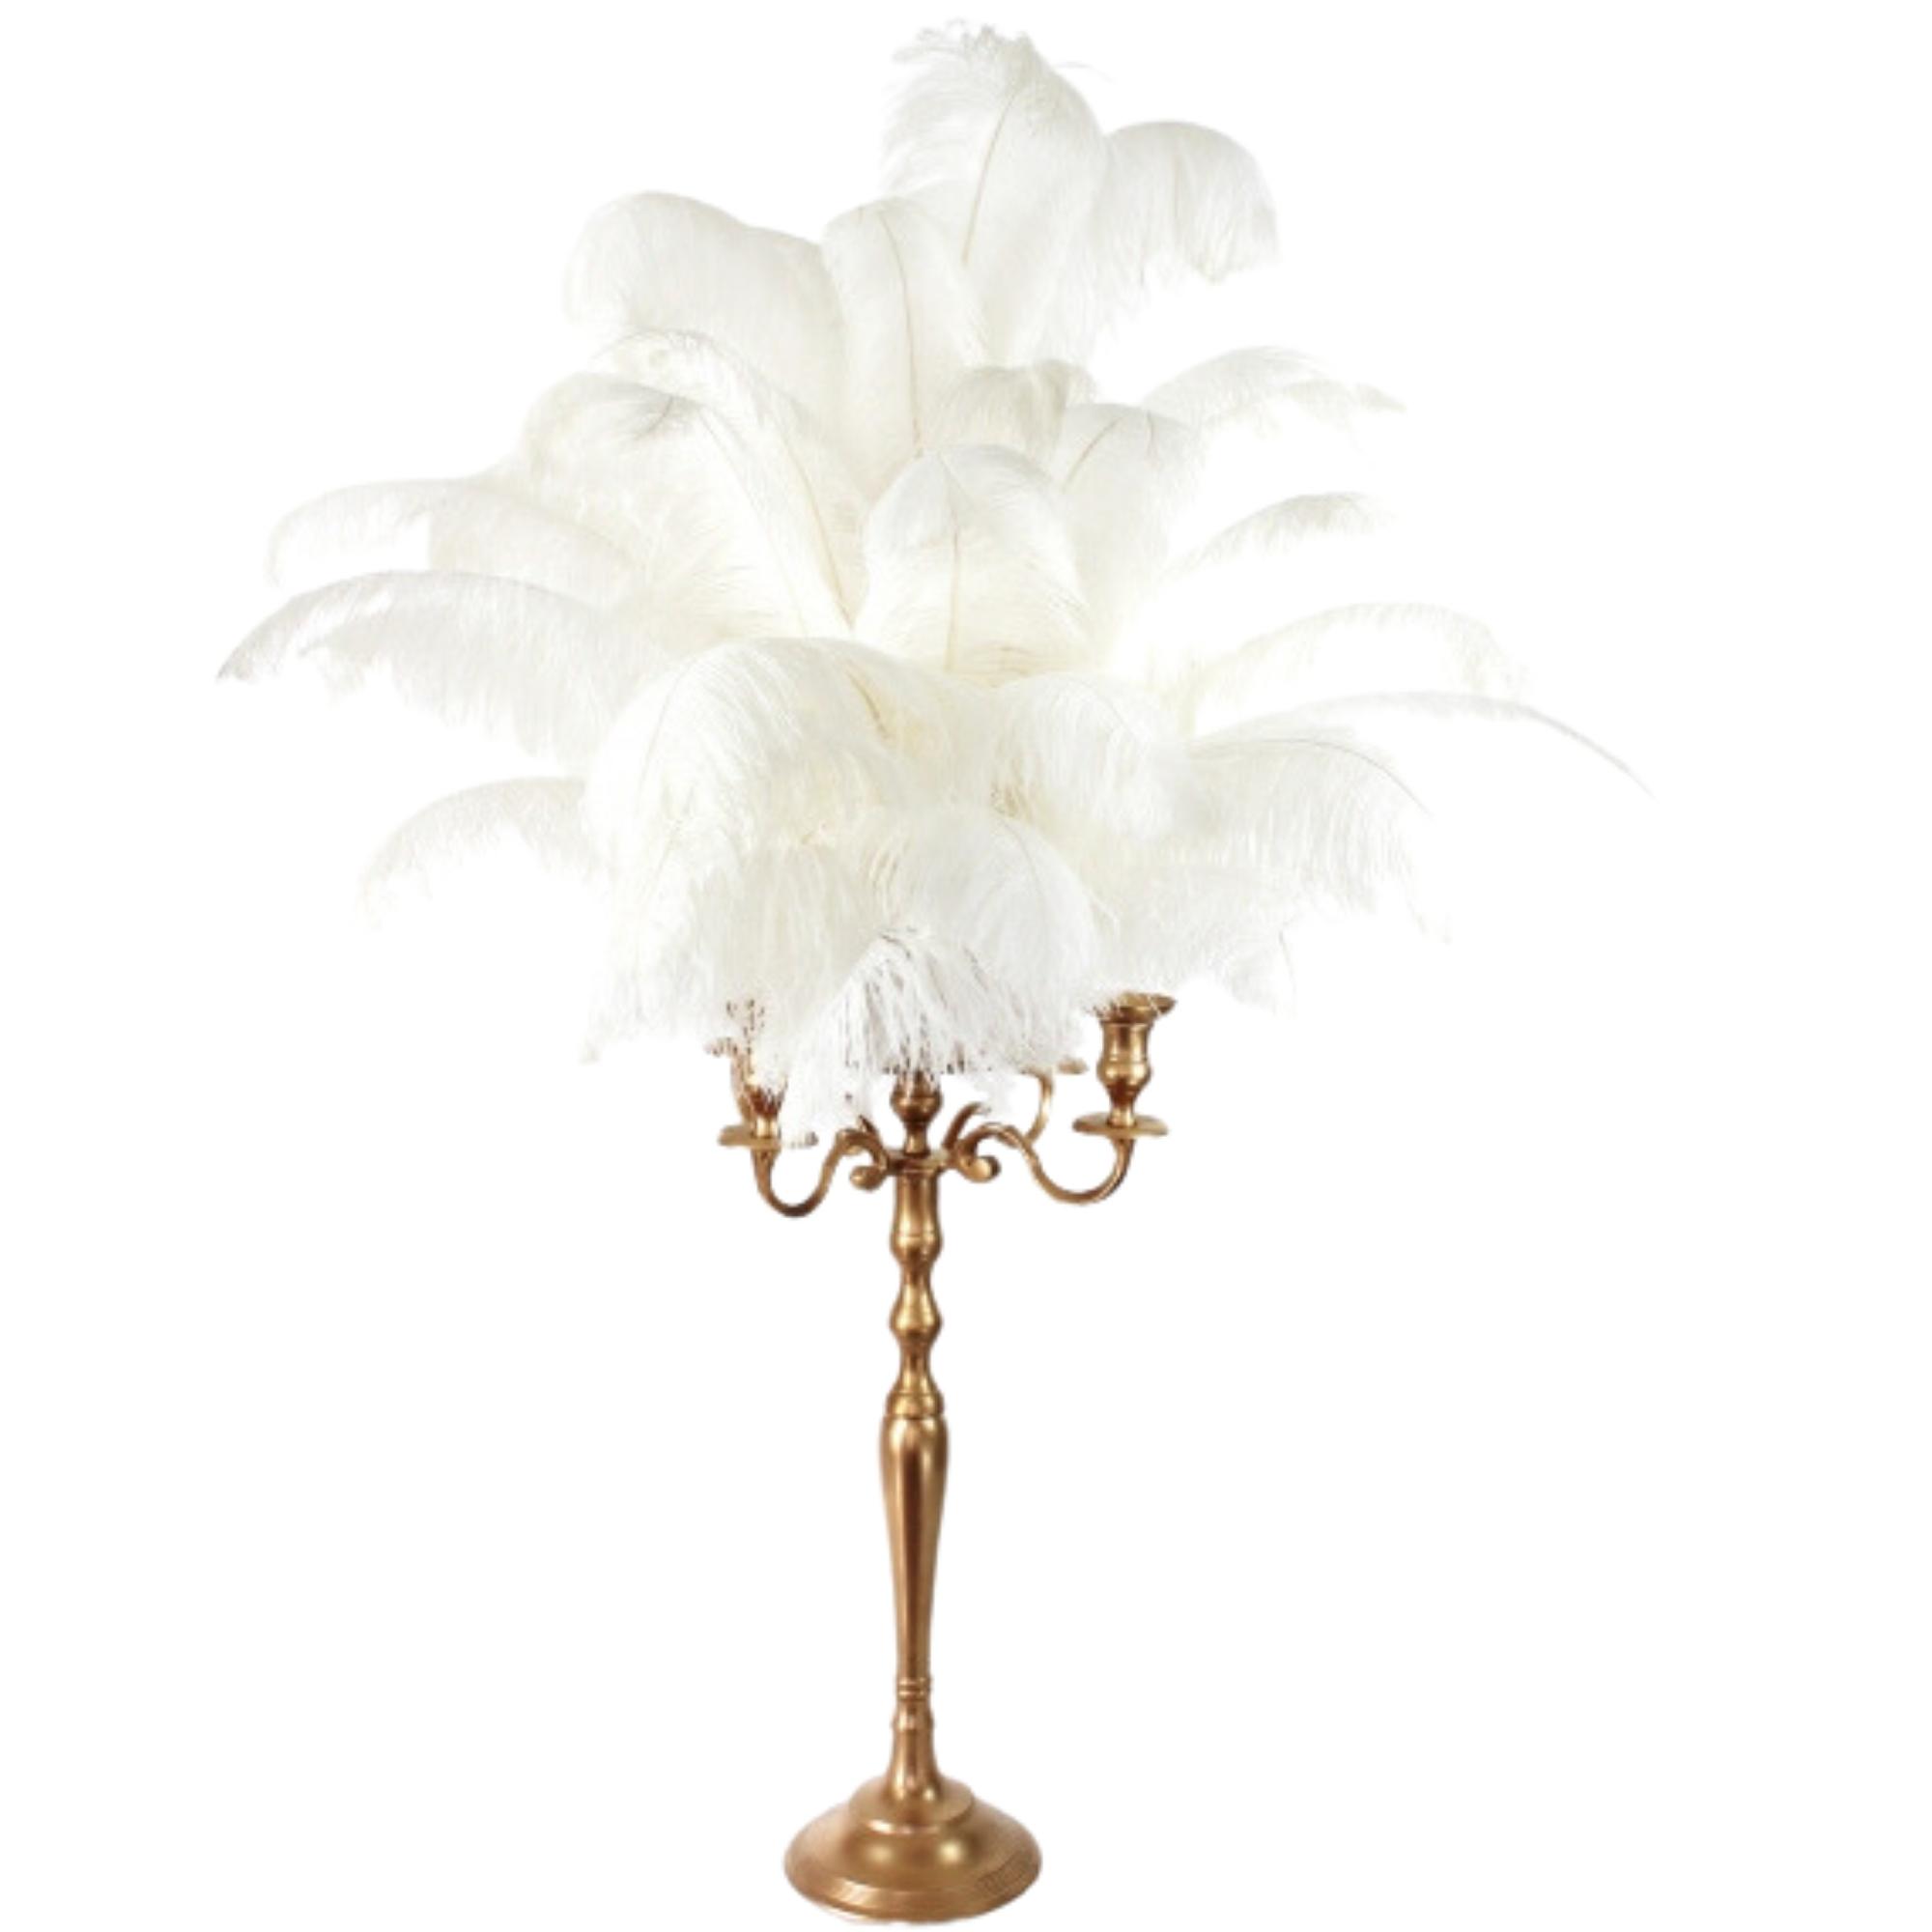 White Ostrich feather centerpiece on gold candelabra 58 inch tall # 113052